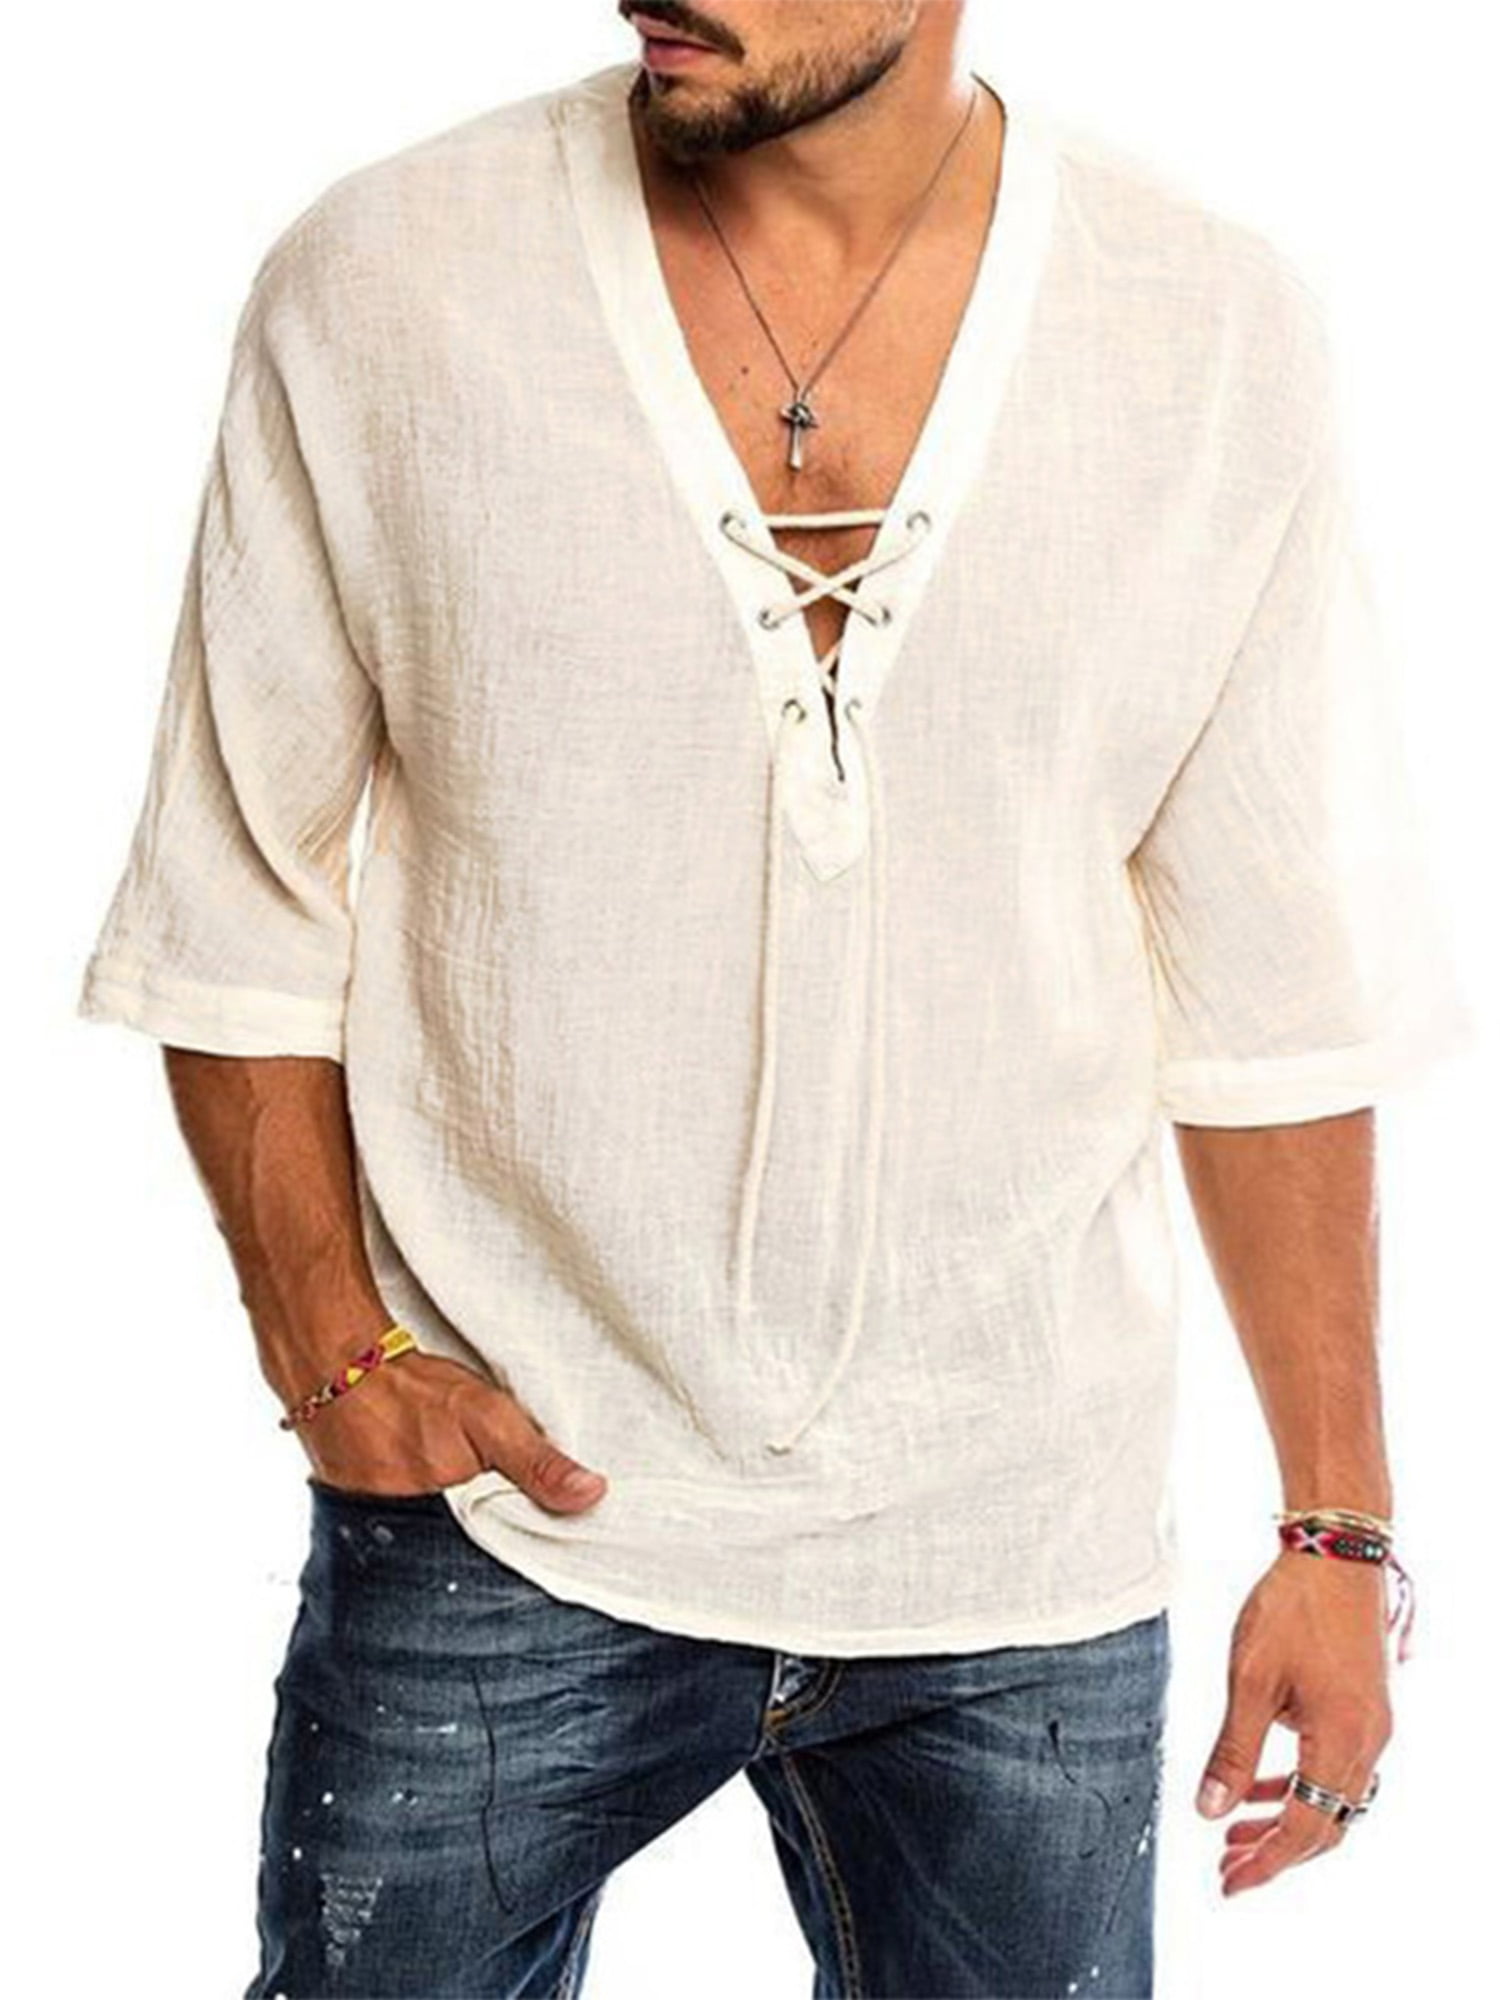 PURE COTTON Mens White Shirt 100% Cotton Casual Hippie Shirt V-Neck Drawstring Short Sleeve Beach Yoga Top 